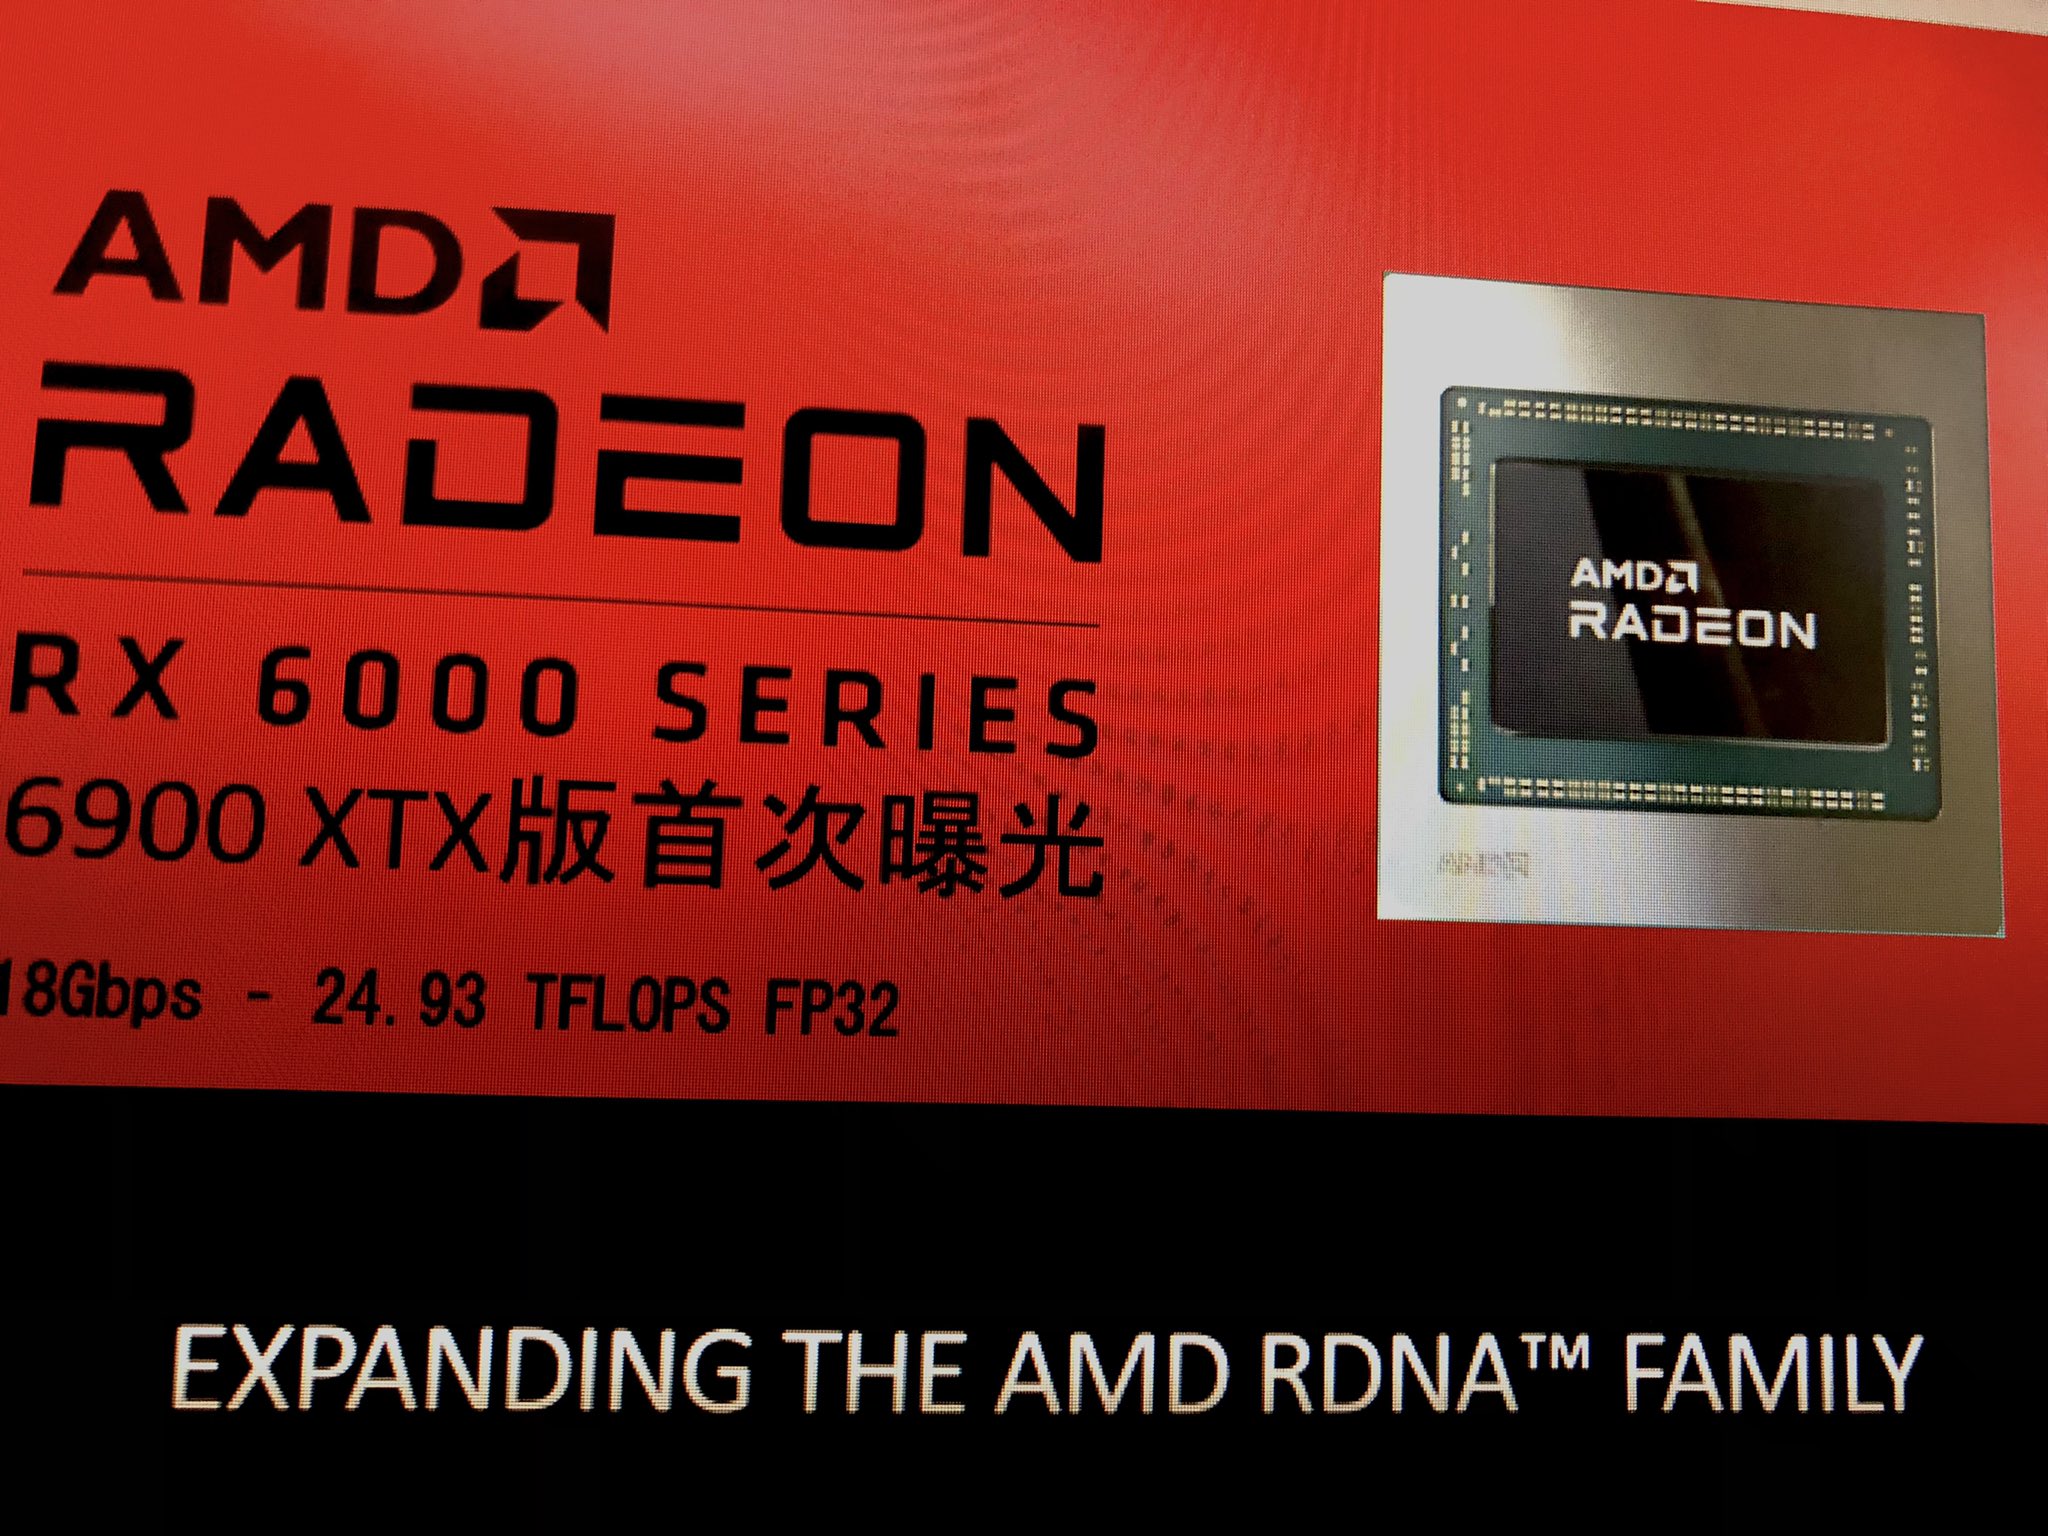 Gigabyte leak lists unreleased AMD Radeon RX 7600 XT with 16GB of memory -  VideoCardz.com : r/Amd